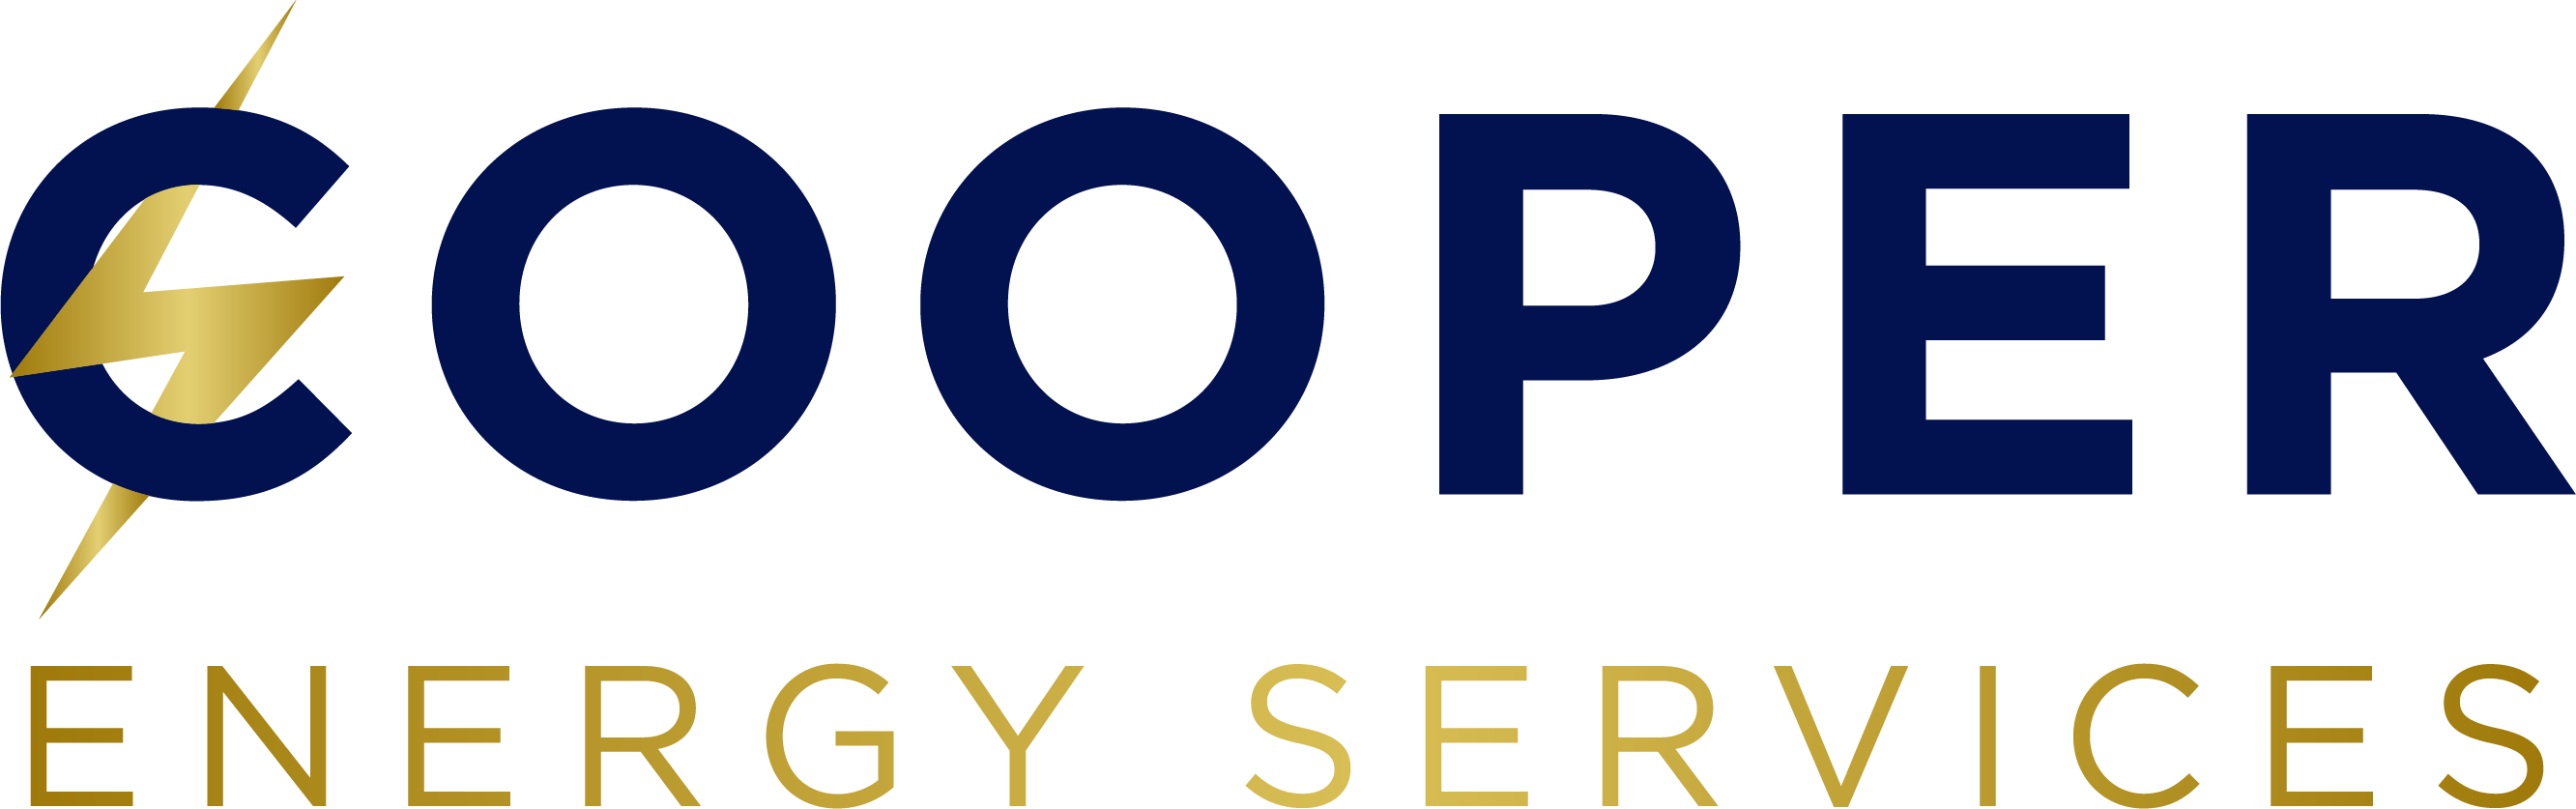 Cooper Energy Services